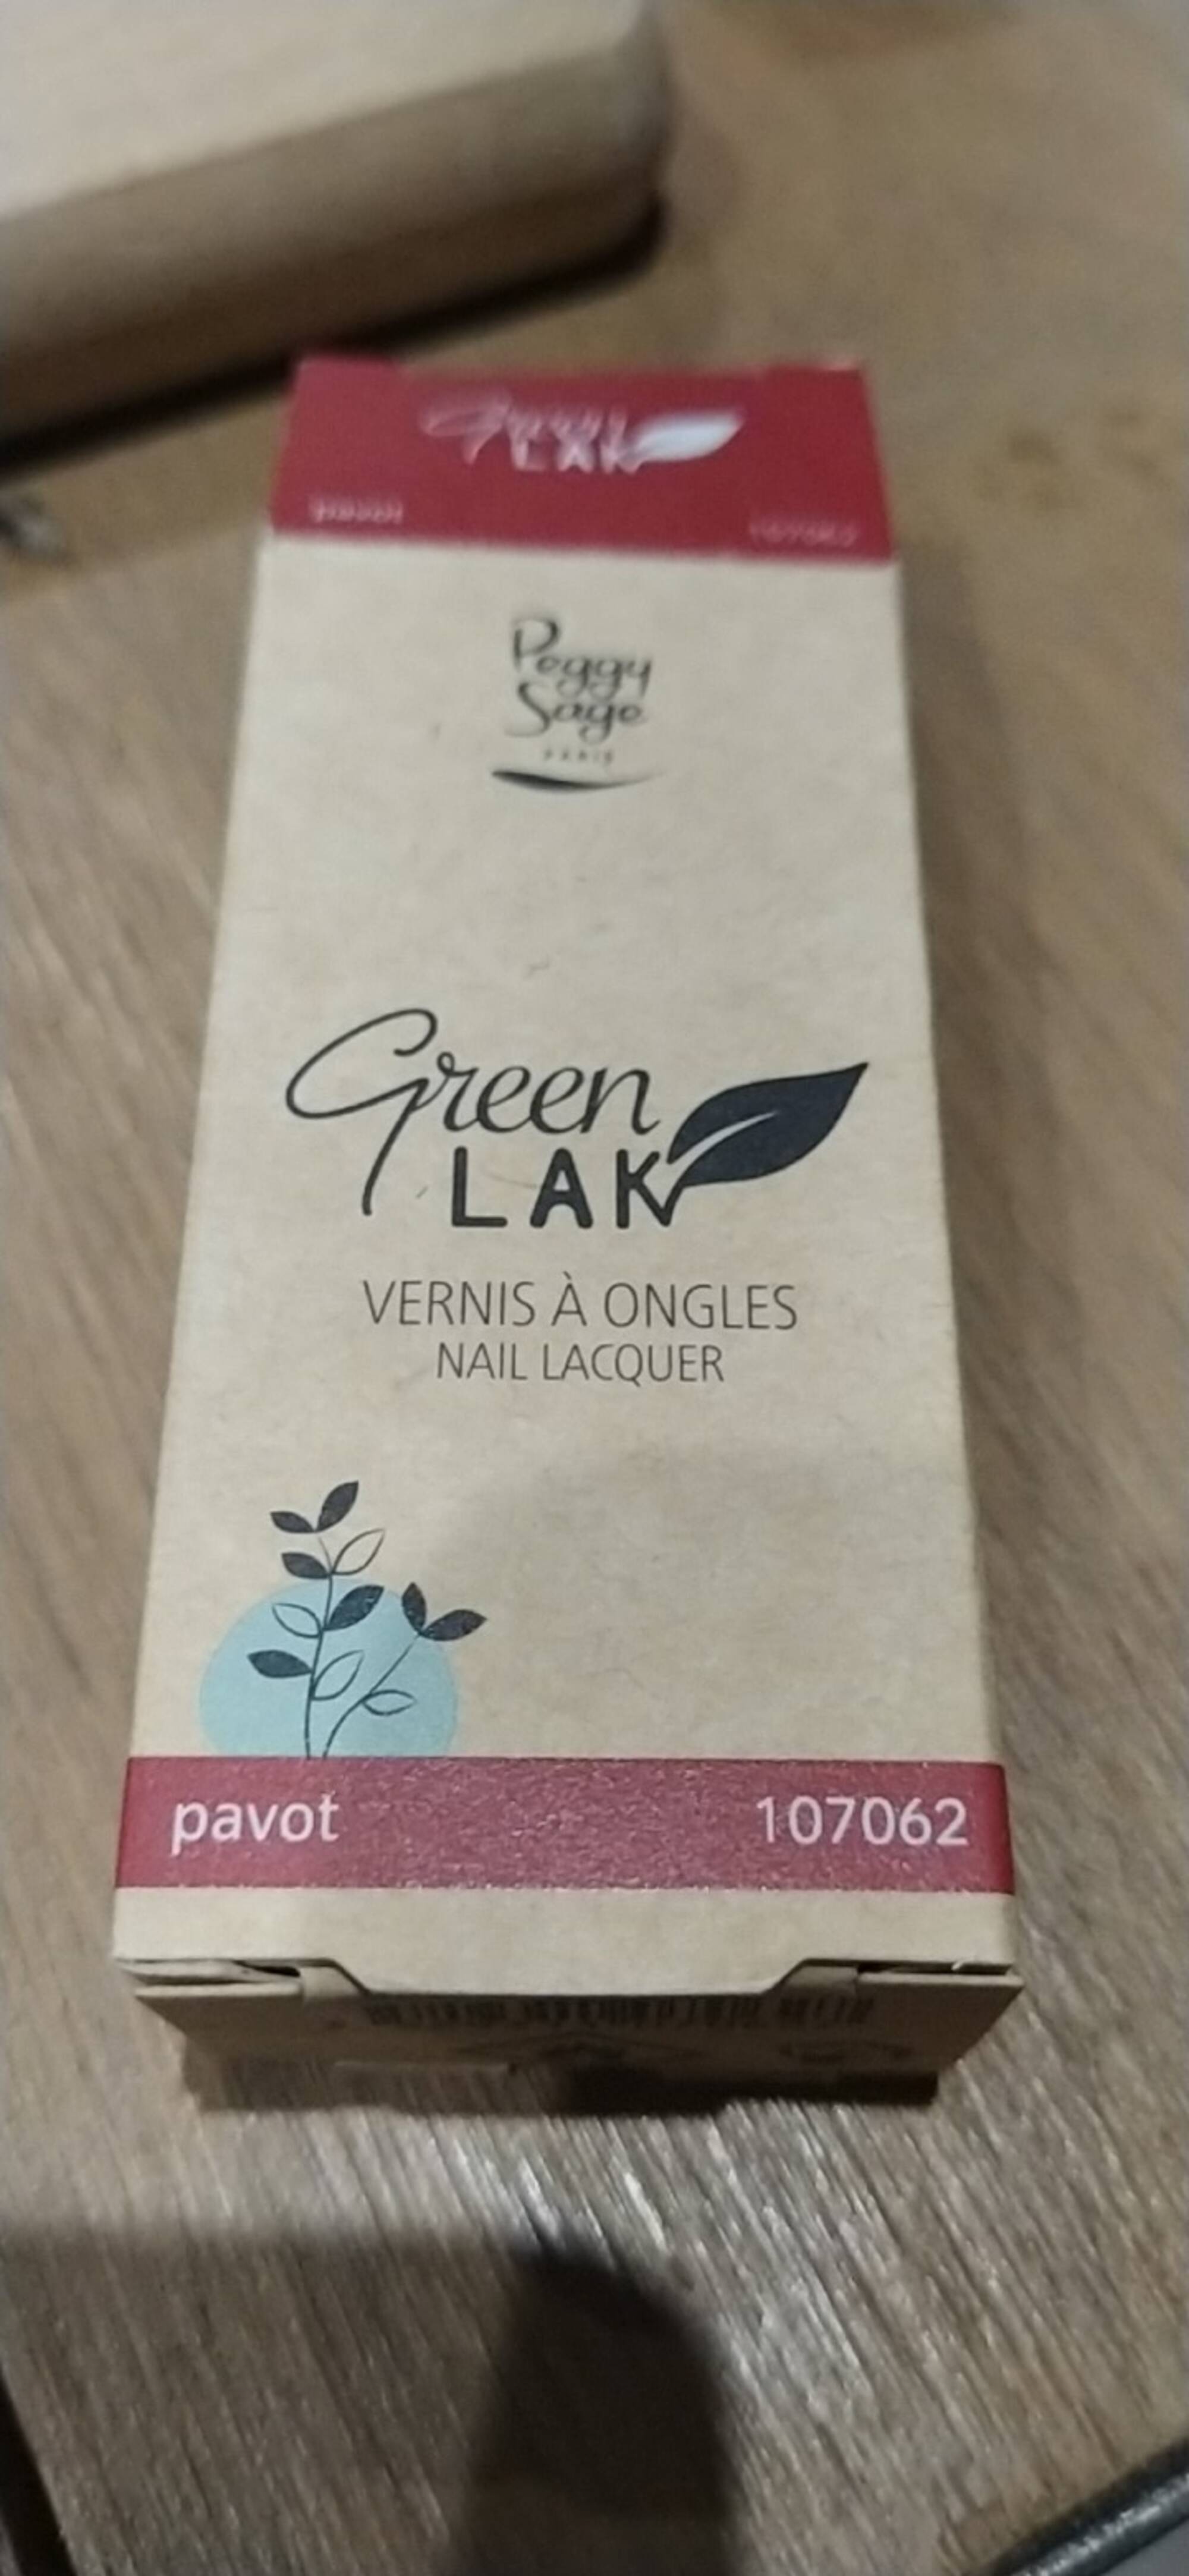 PEGGY SAGE - Green lak - Vernis à ongles